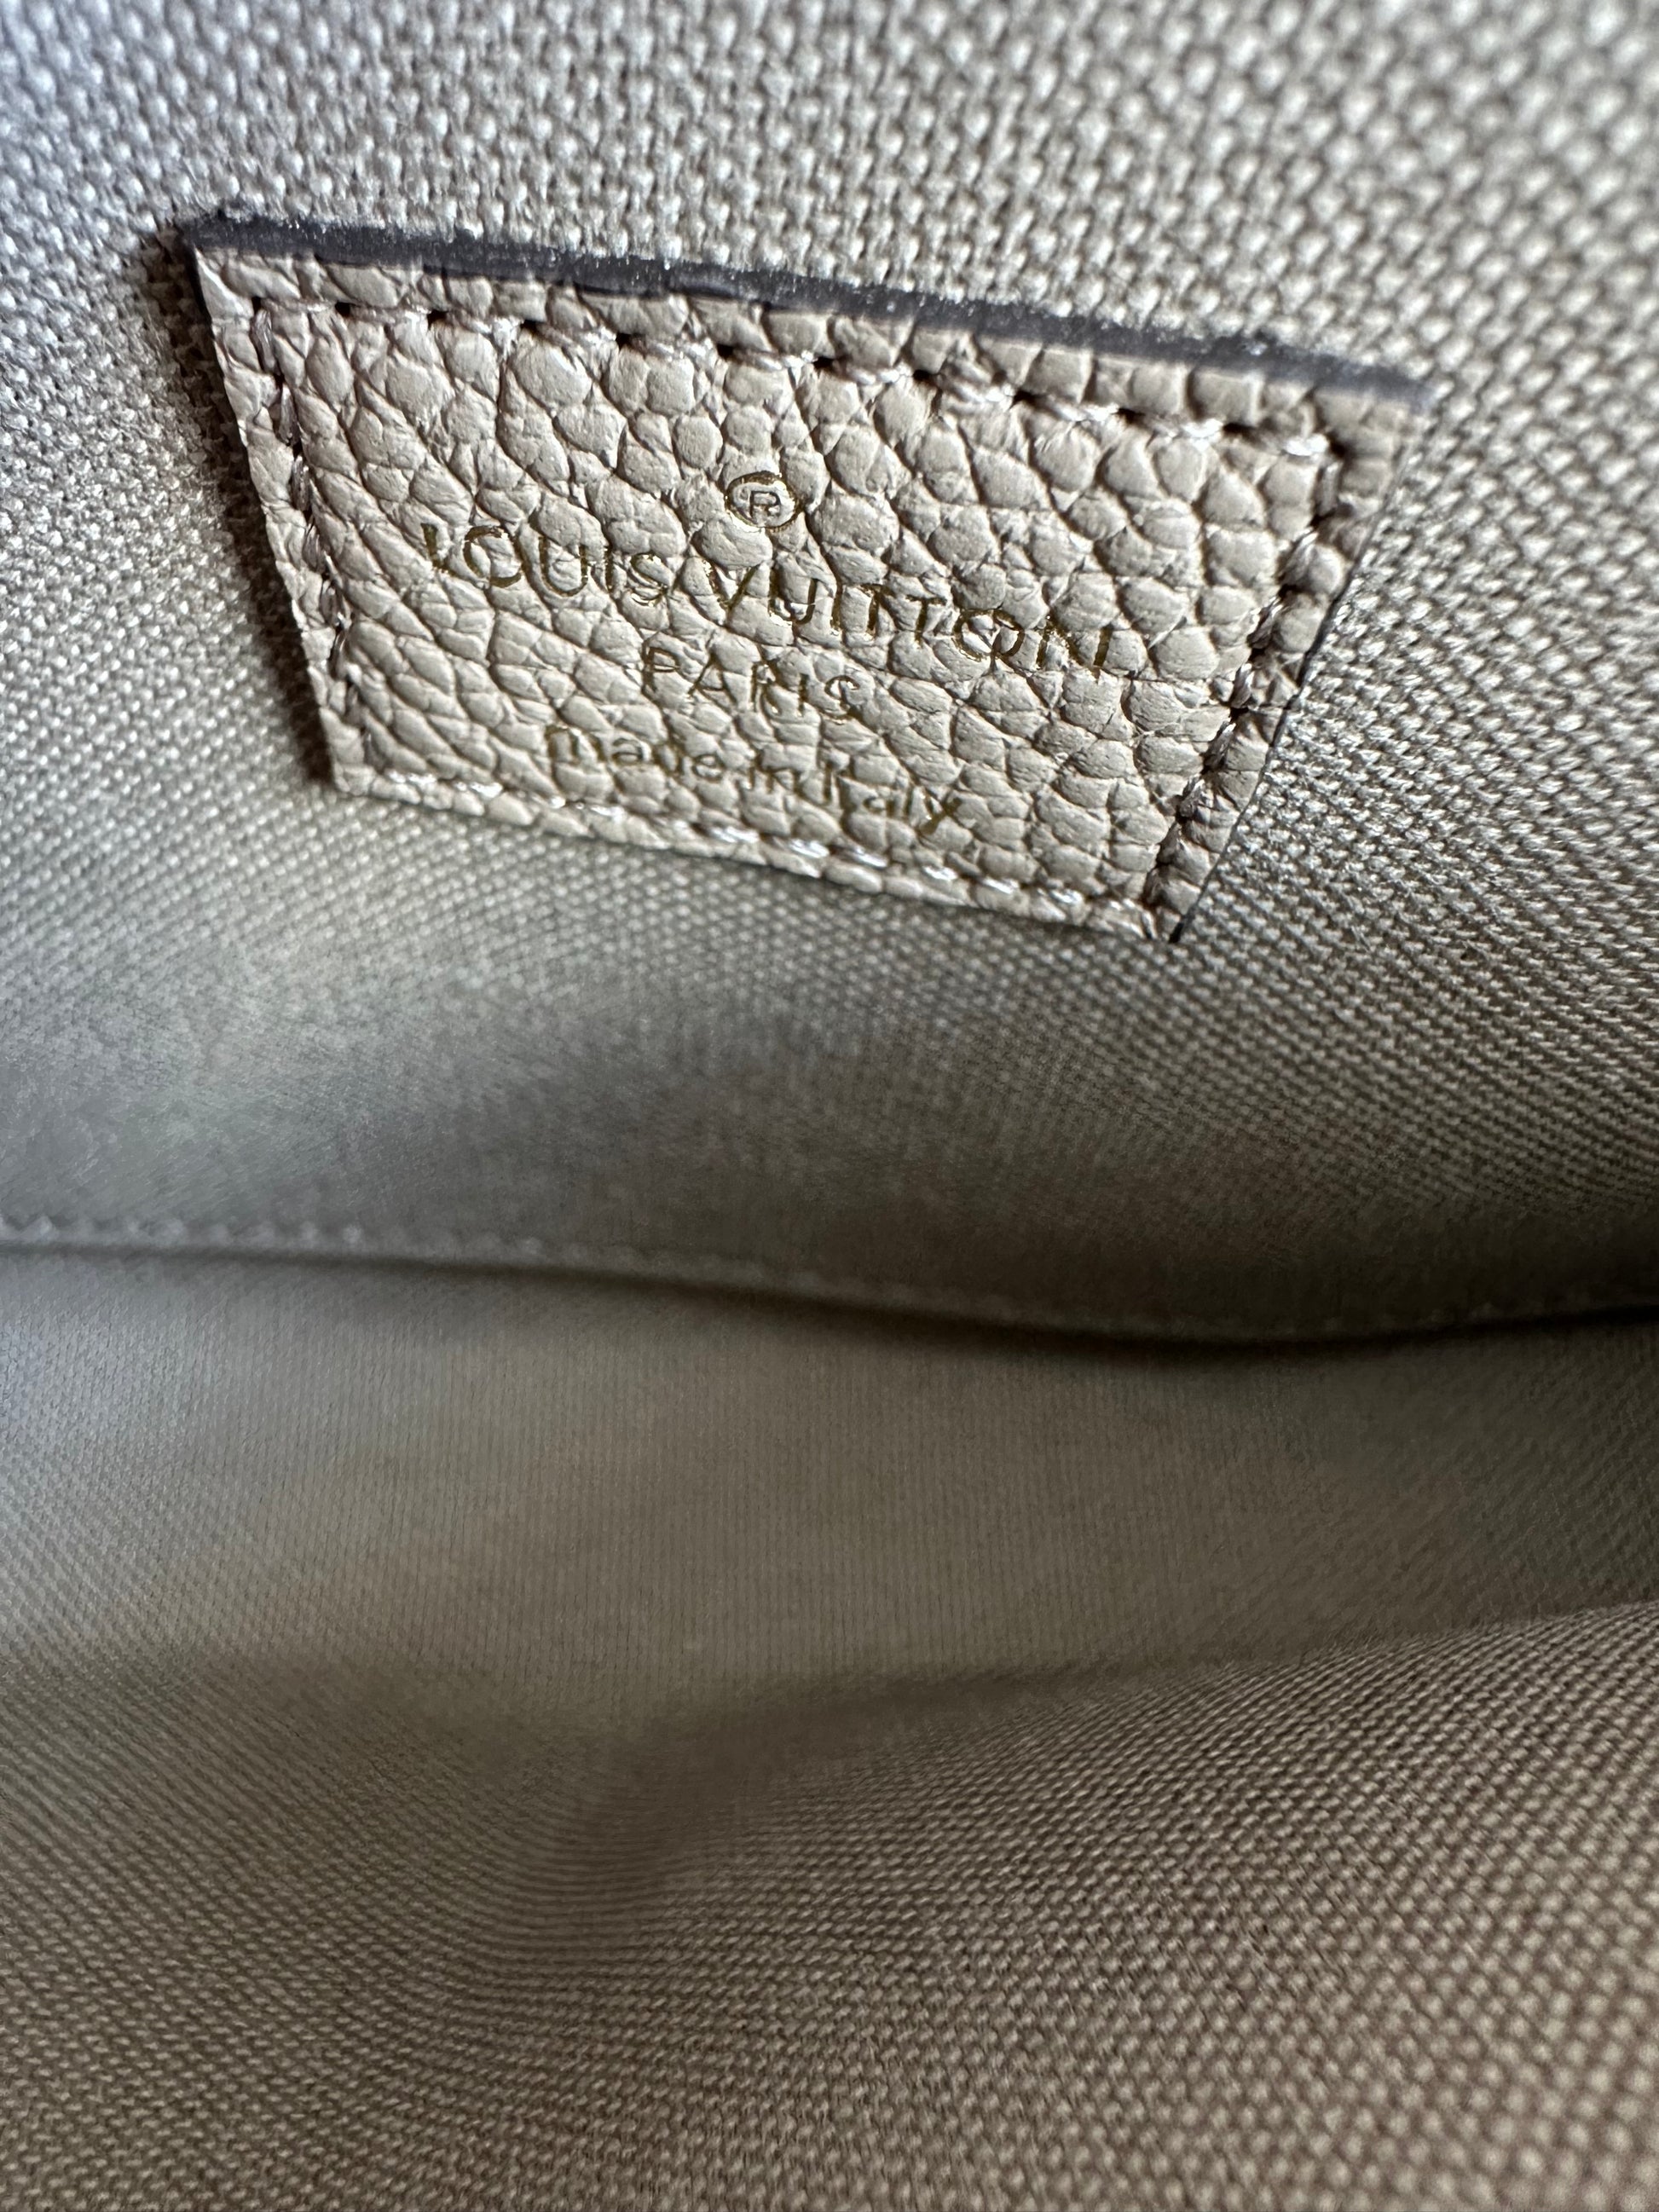 Authentic Louis Vuitton Cream/Dove Monogram Empreinte Felicie Pochette Bag